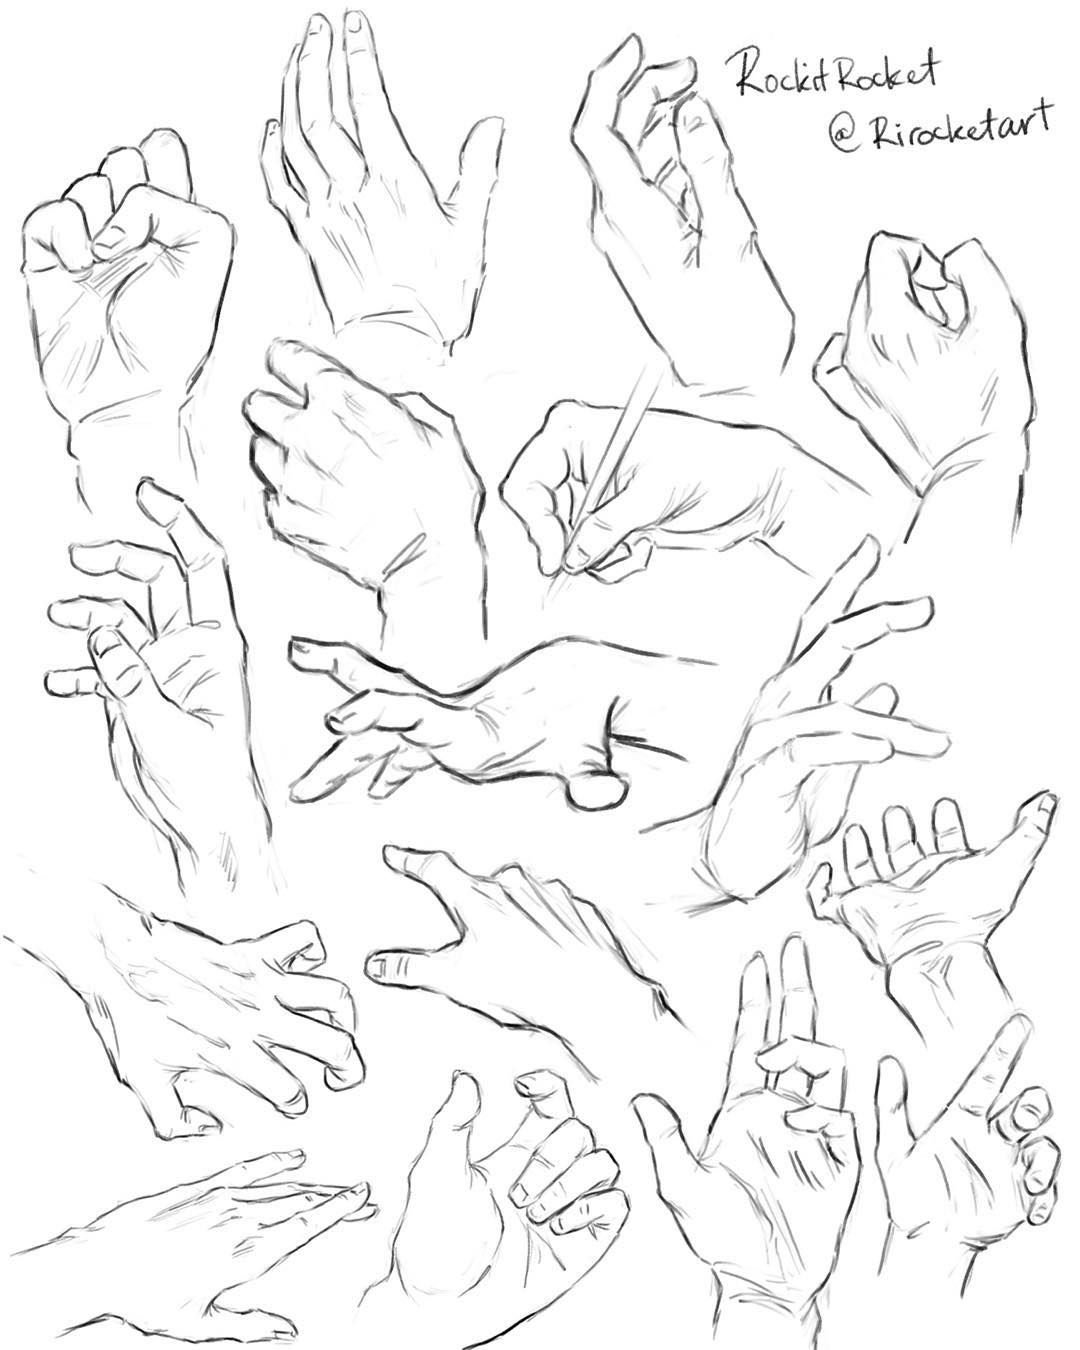 Референсы рук рисунок. Кисть руки референс. Зарисовки рук. Рука референс для рисования. Кисти рук референсы.